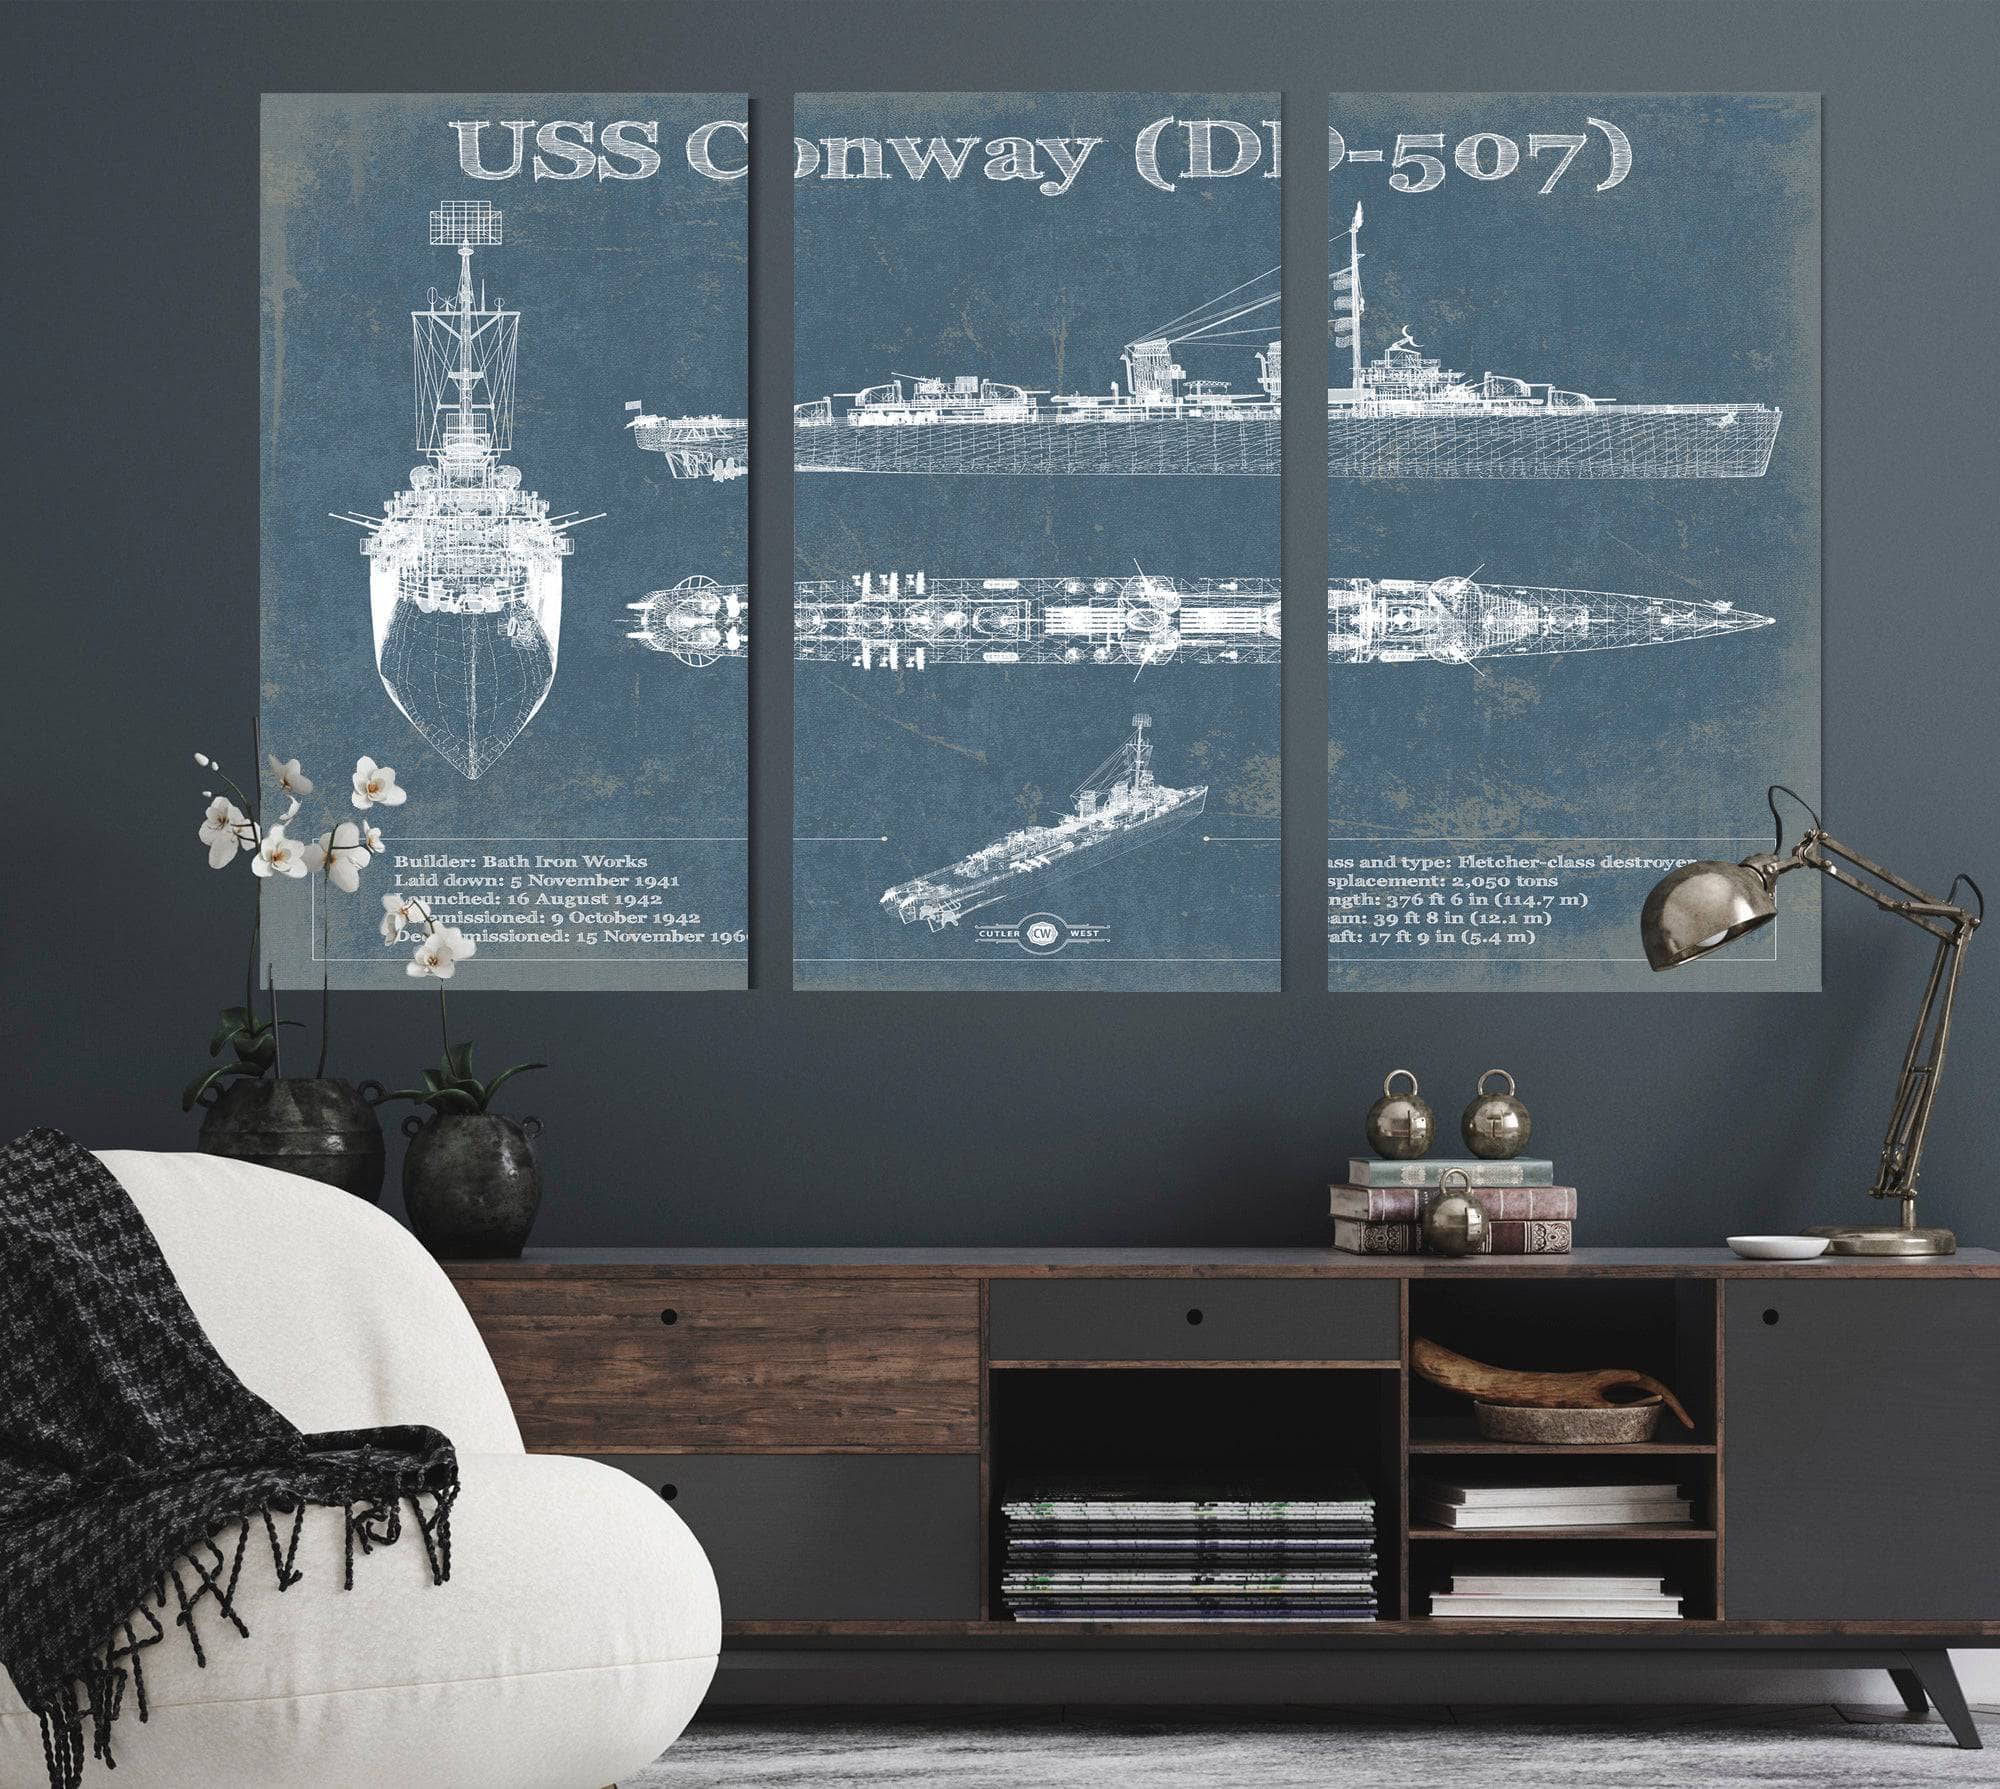 USS Conway (DD-507) Blueprint Original Military Wall Art - Customizable